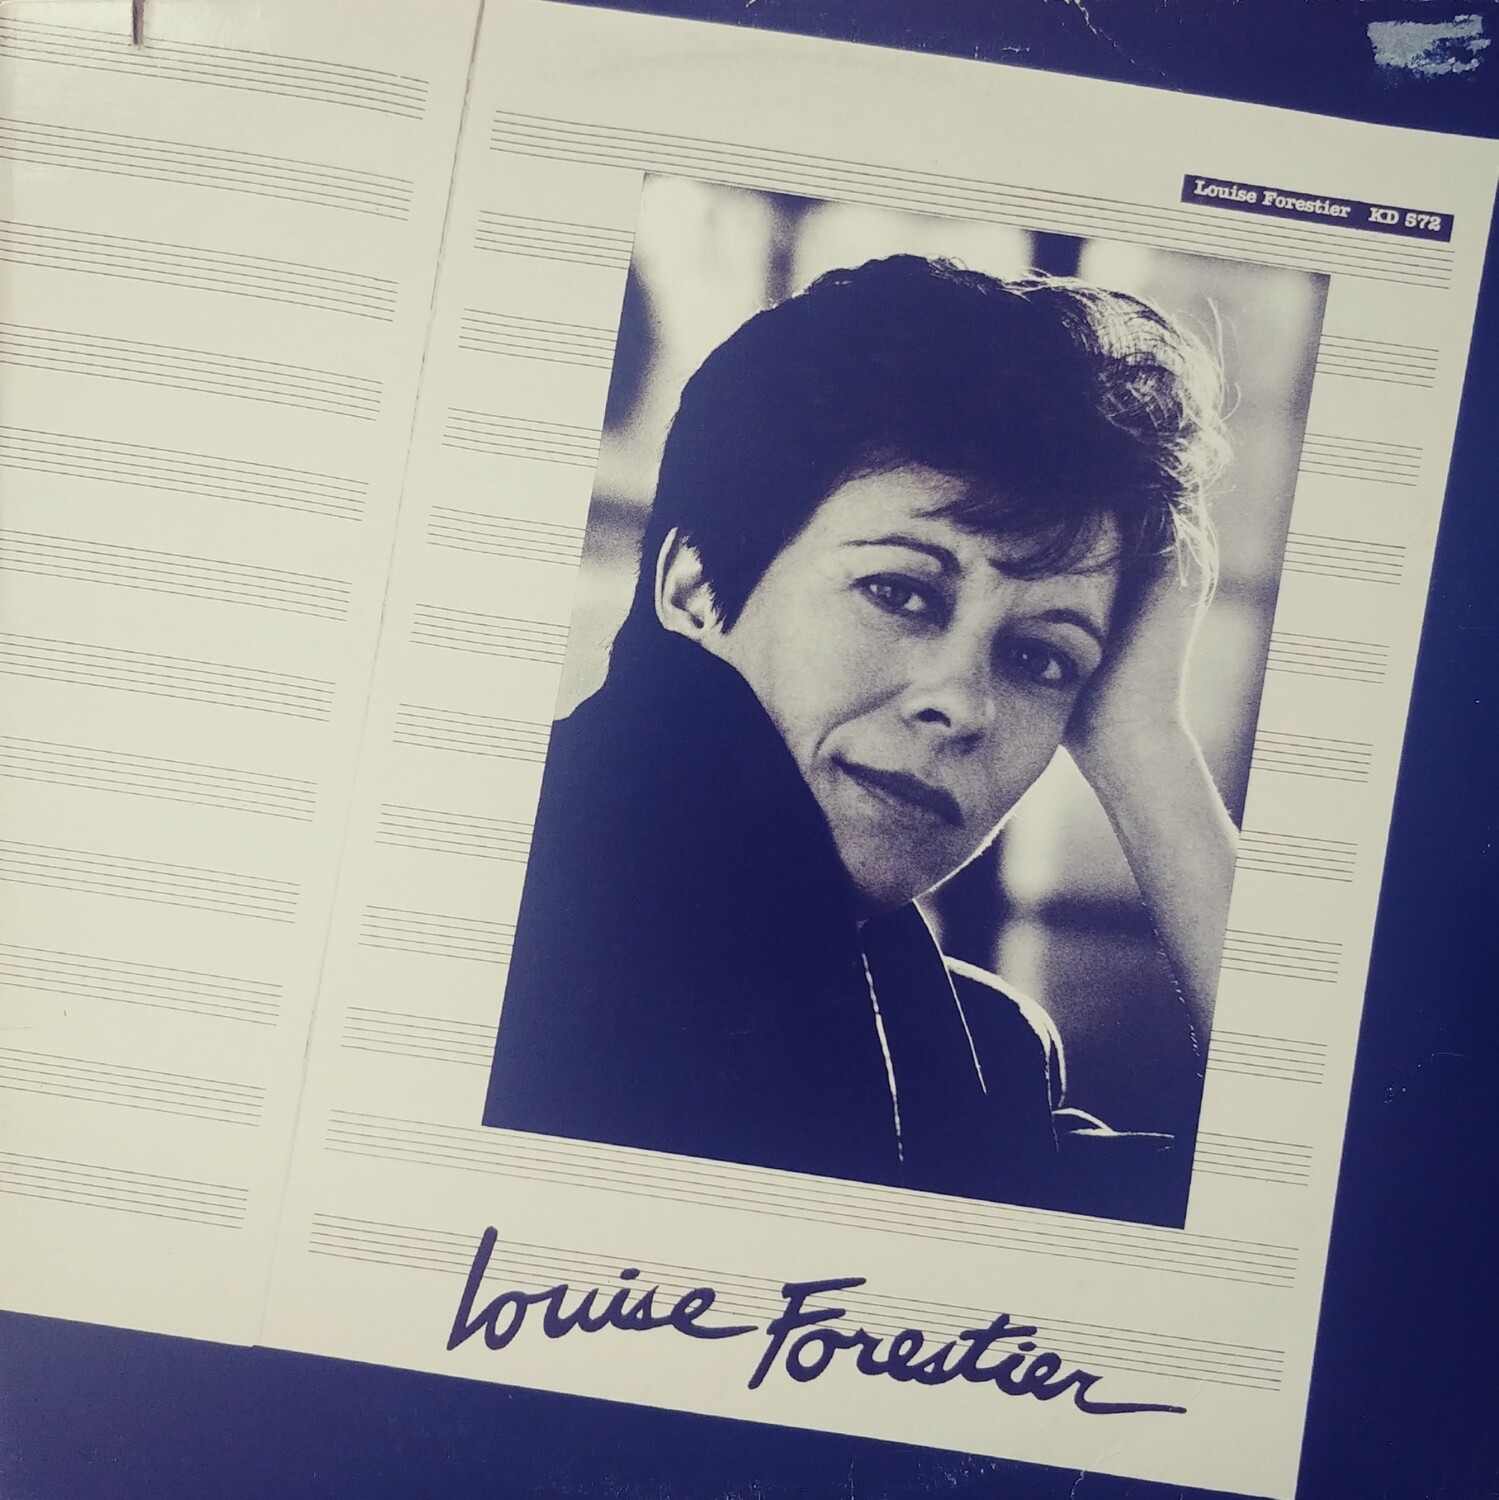 Louise Forestier - Louise Forestier